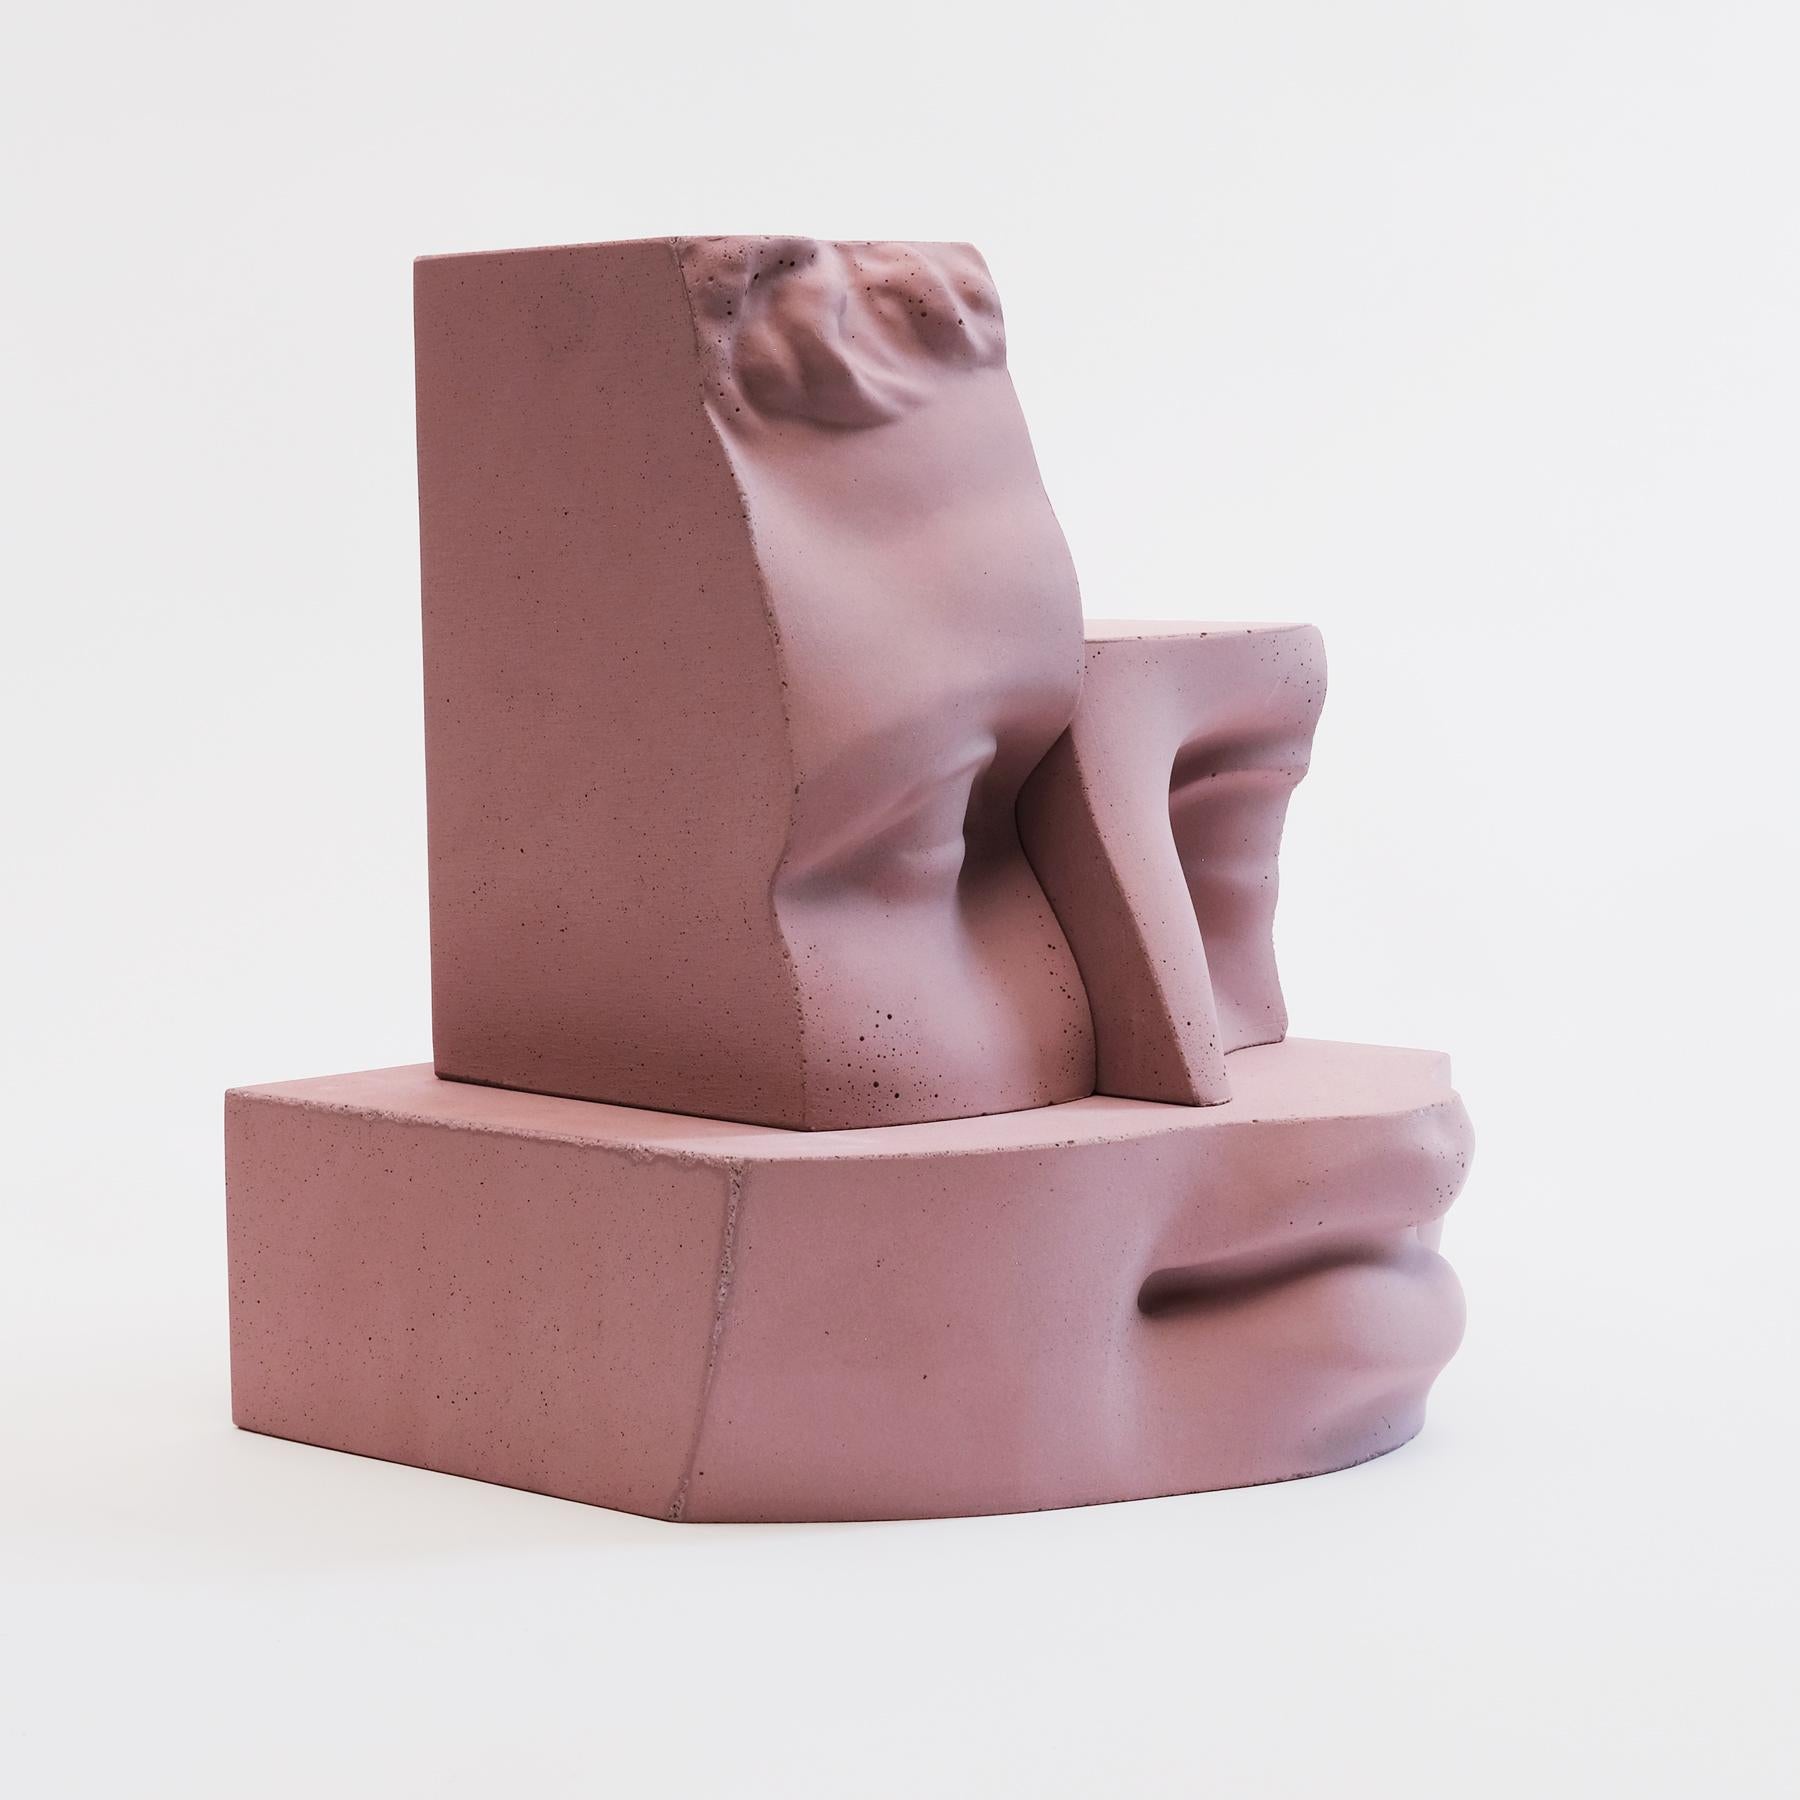 Italian Hermes - Rose - Design Sculpture Paolo Giordano Concrete Cement Cast For Sale